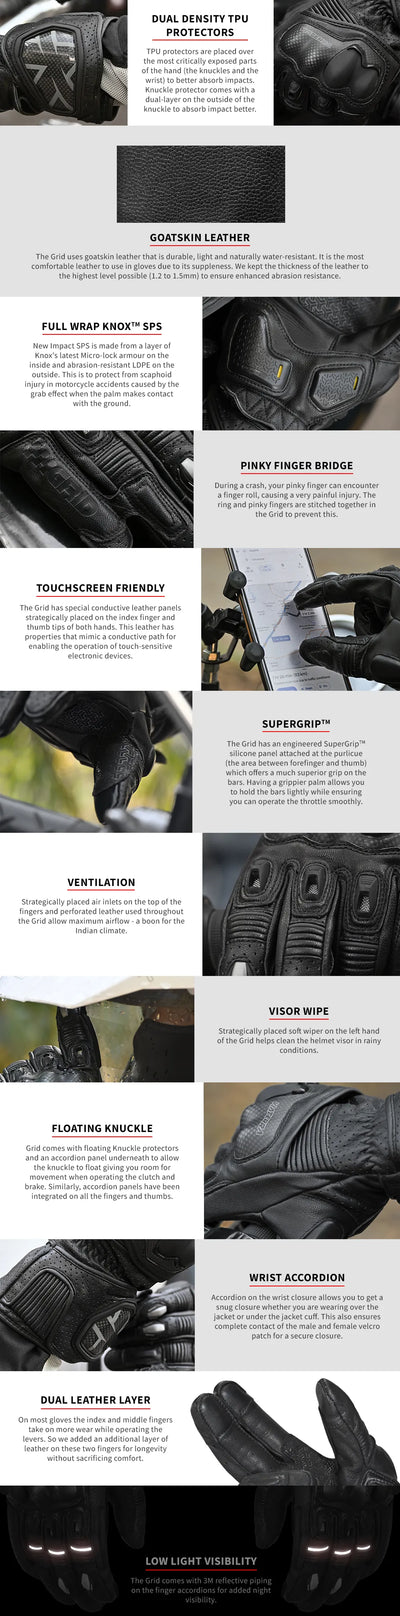 ViaTerra grid – full gauntlet motorcycle riding gloves